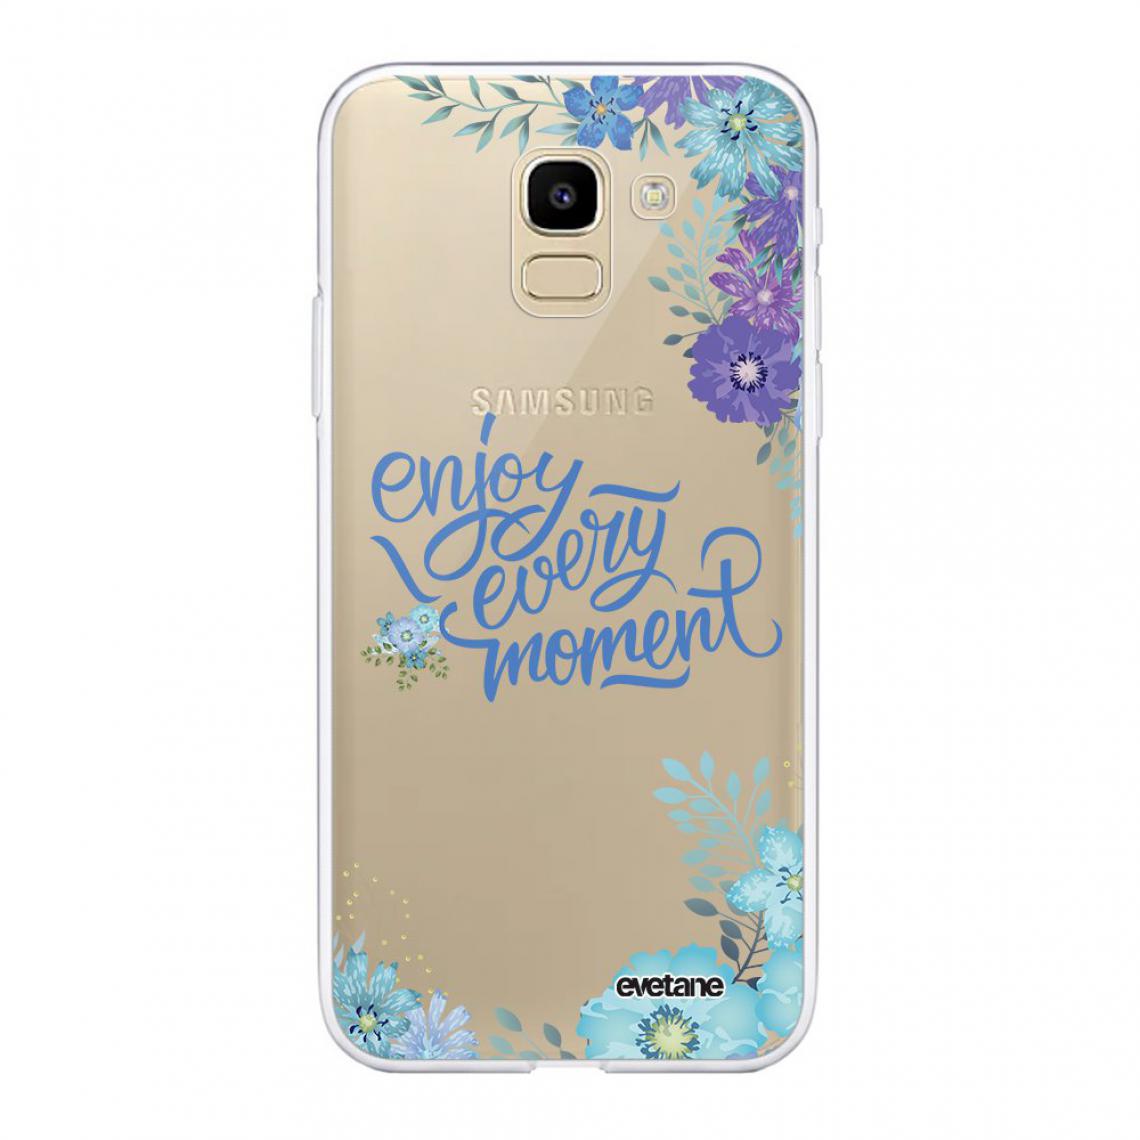 Evetane - Coque Samsung Galaxy J6 2018 360 intégrale avant arrière transparente - Coque, étui smartphone